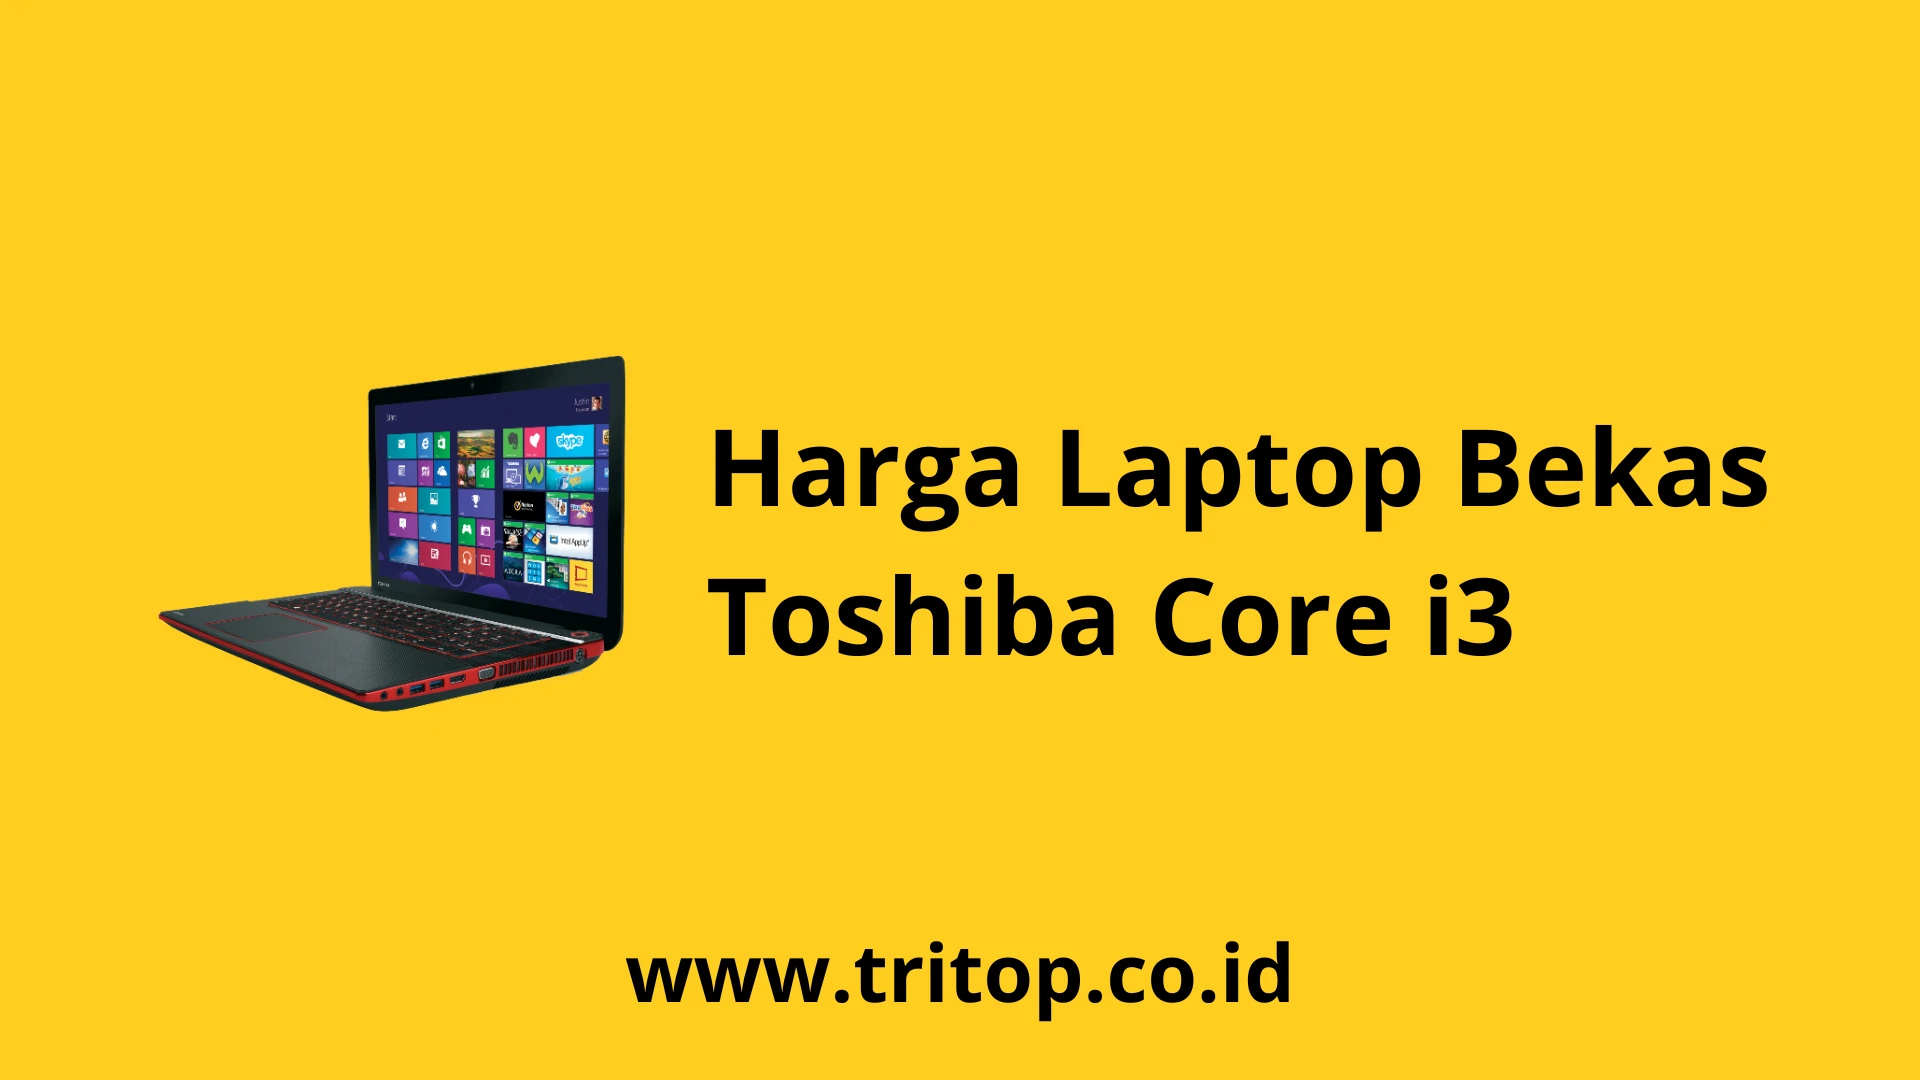 Harga Laptop Bekas Toshiba Core i3 Tritop.co.id